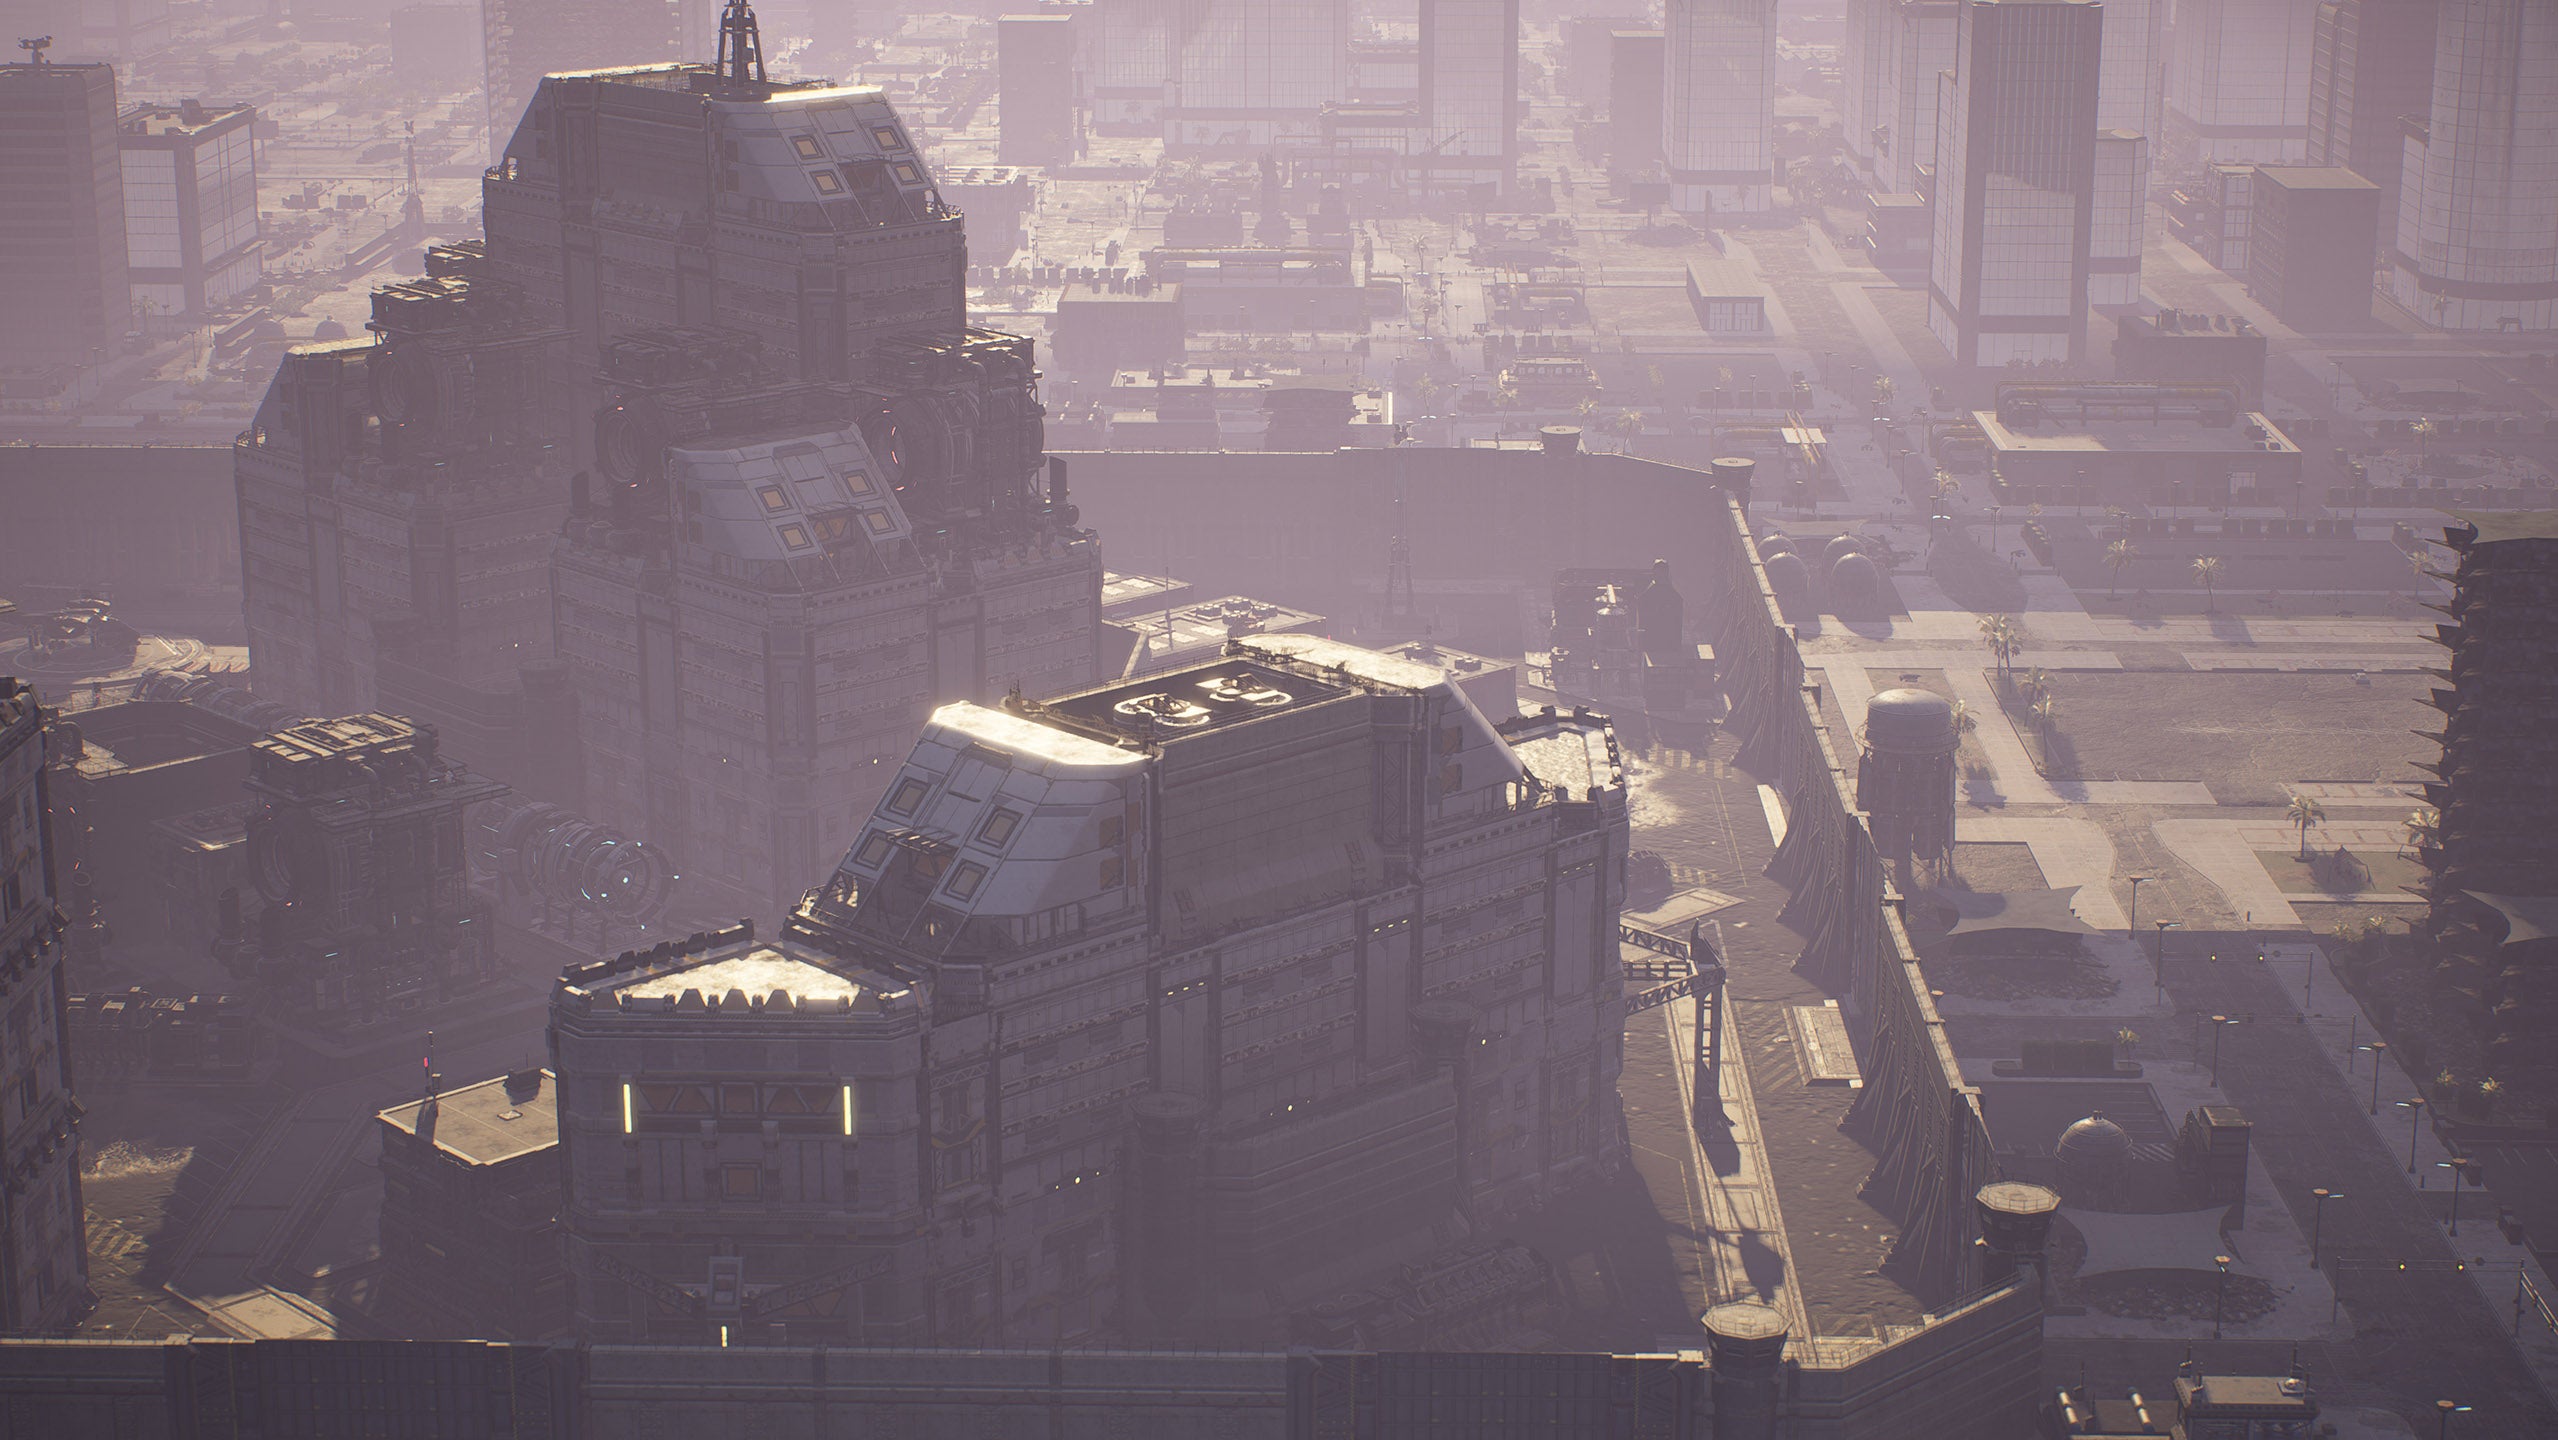 A new city full of destructible buildings in Mechwarrior 5 Mercenaries.